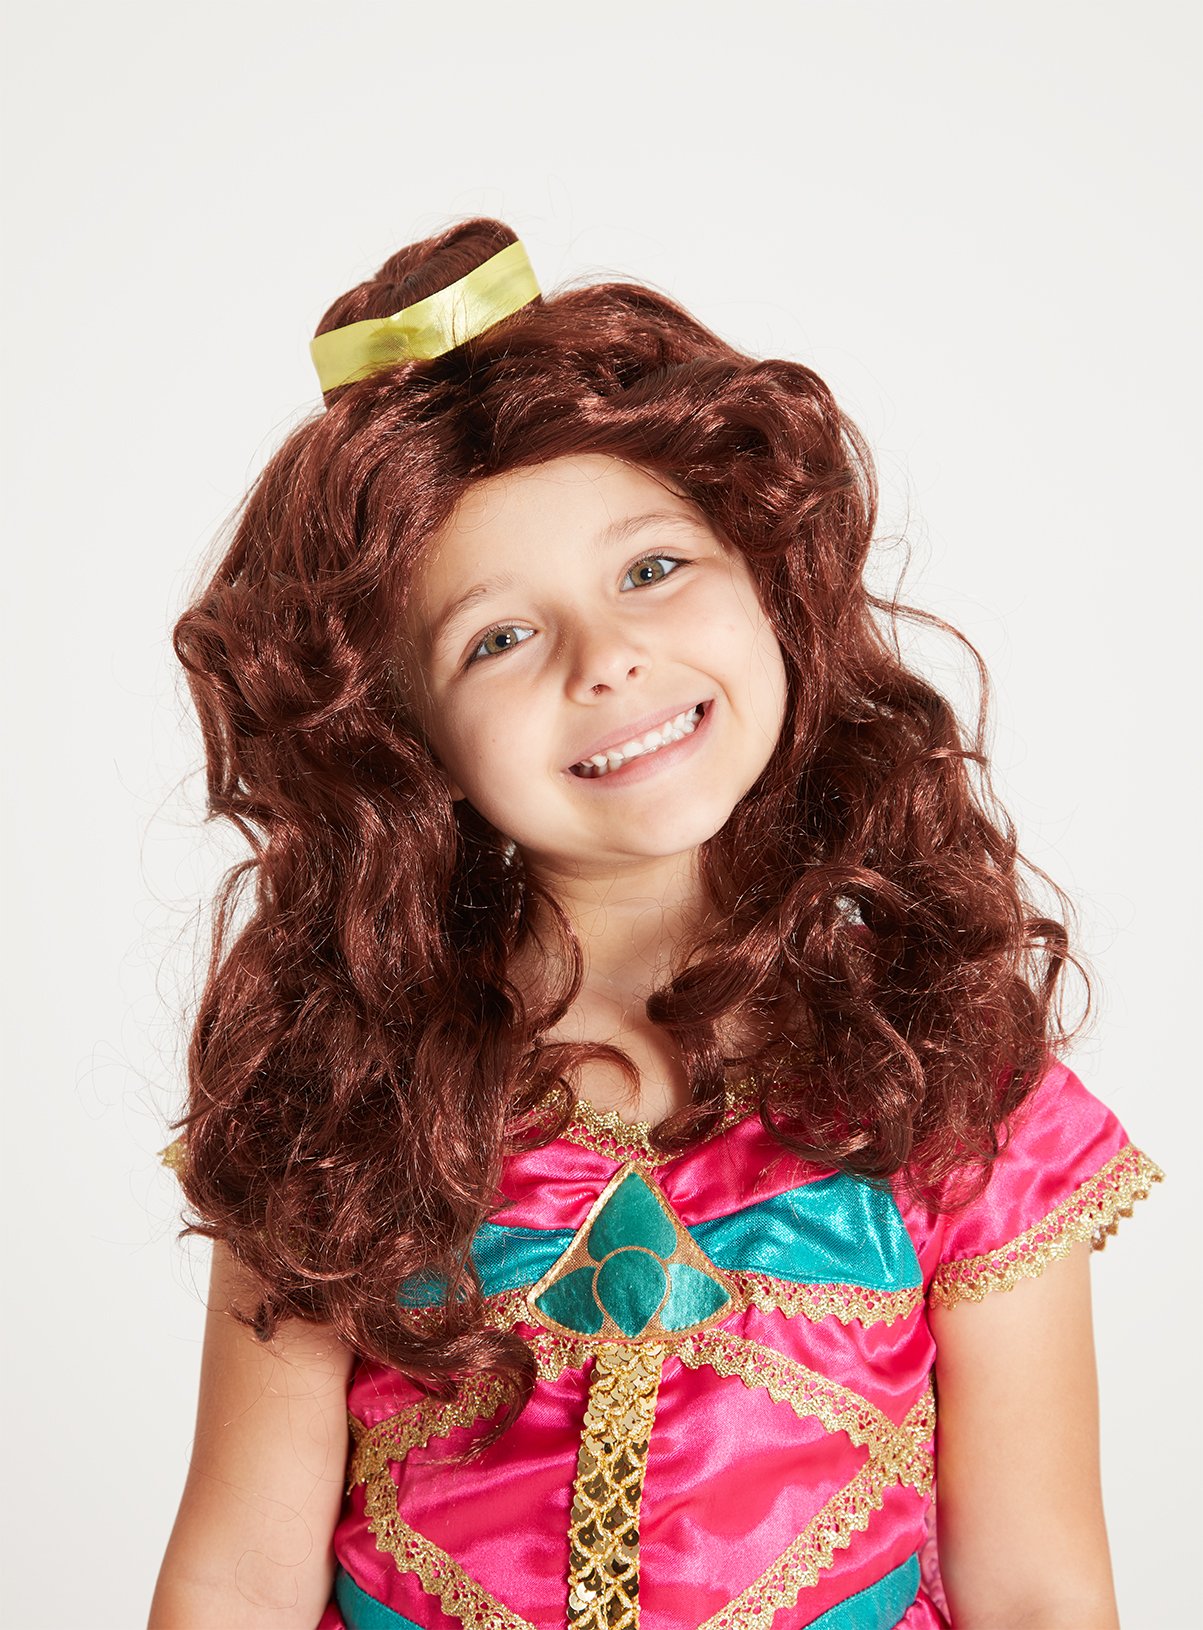 Disney Princess Belle custom designed wig